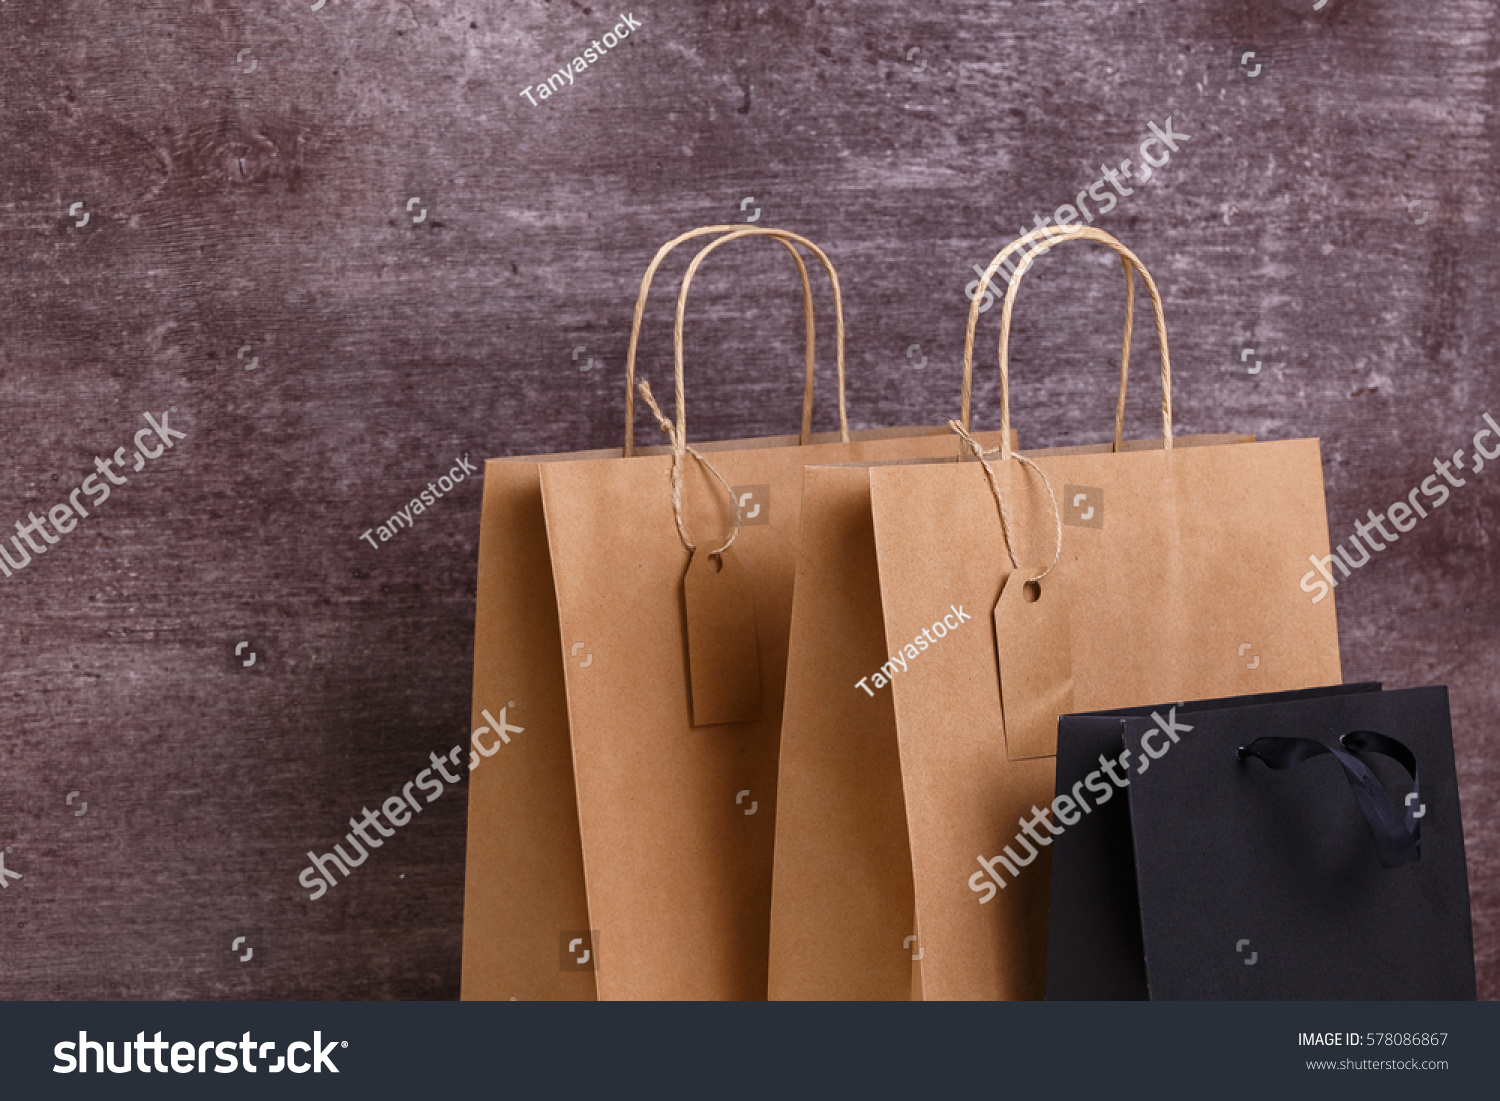 Download Mockup Blank Shopping Bags Brown Black Stock Photo ...